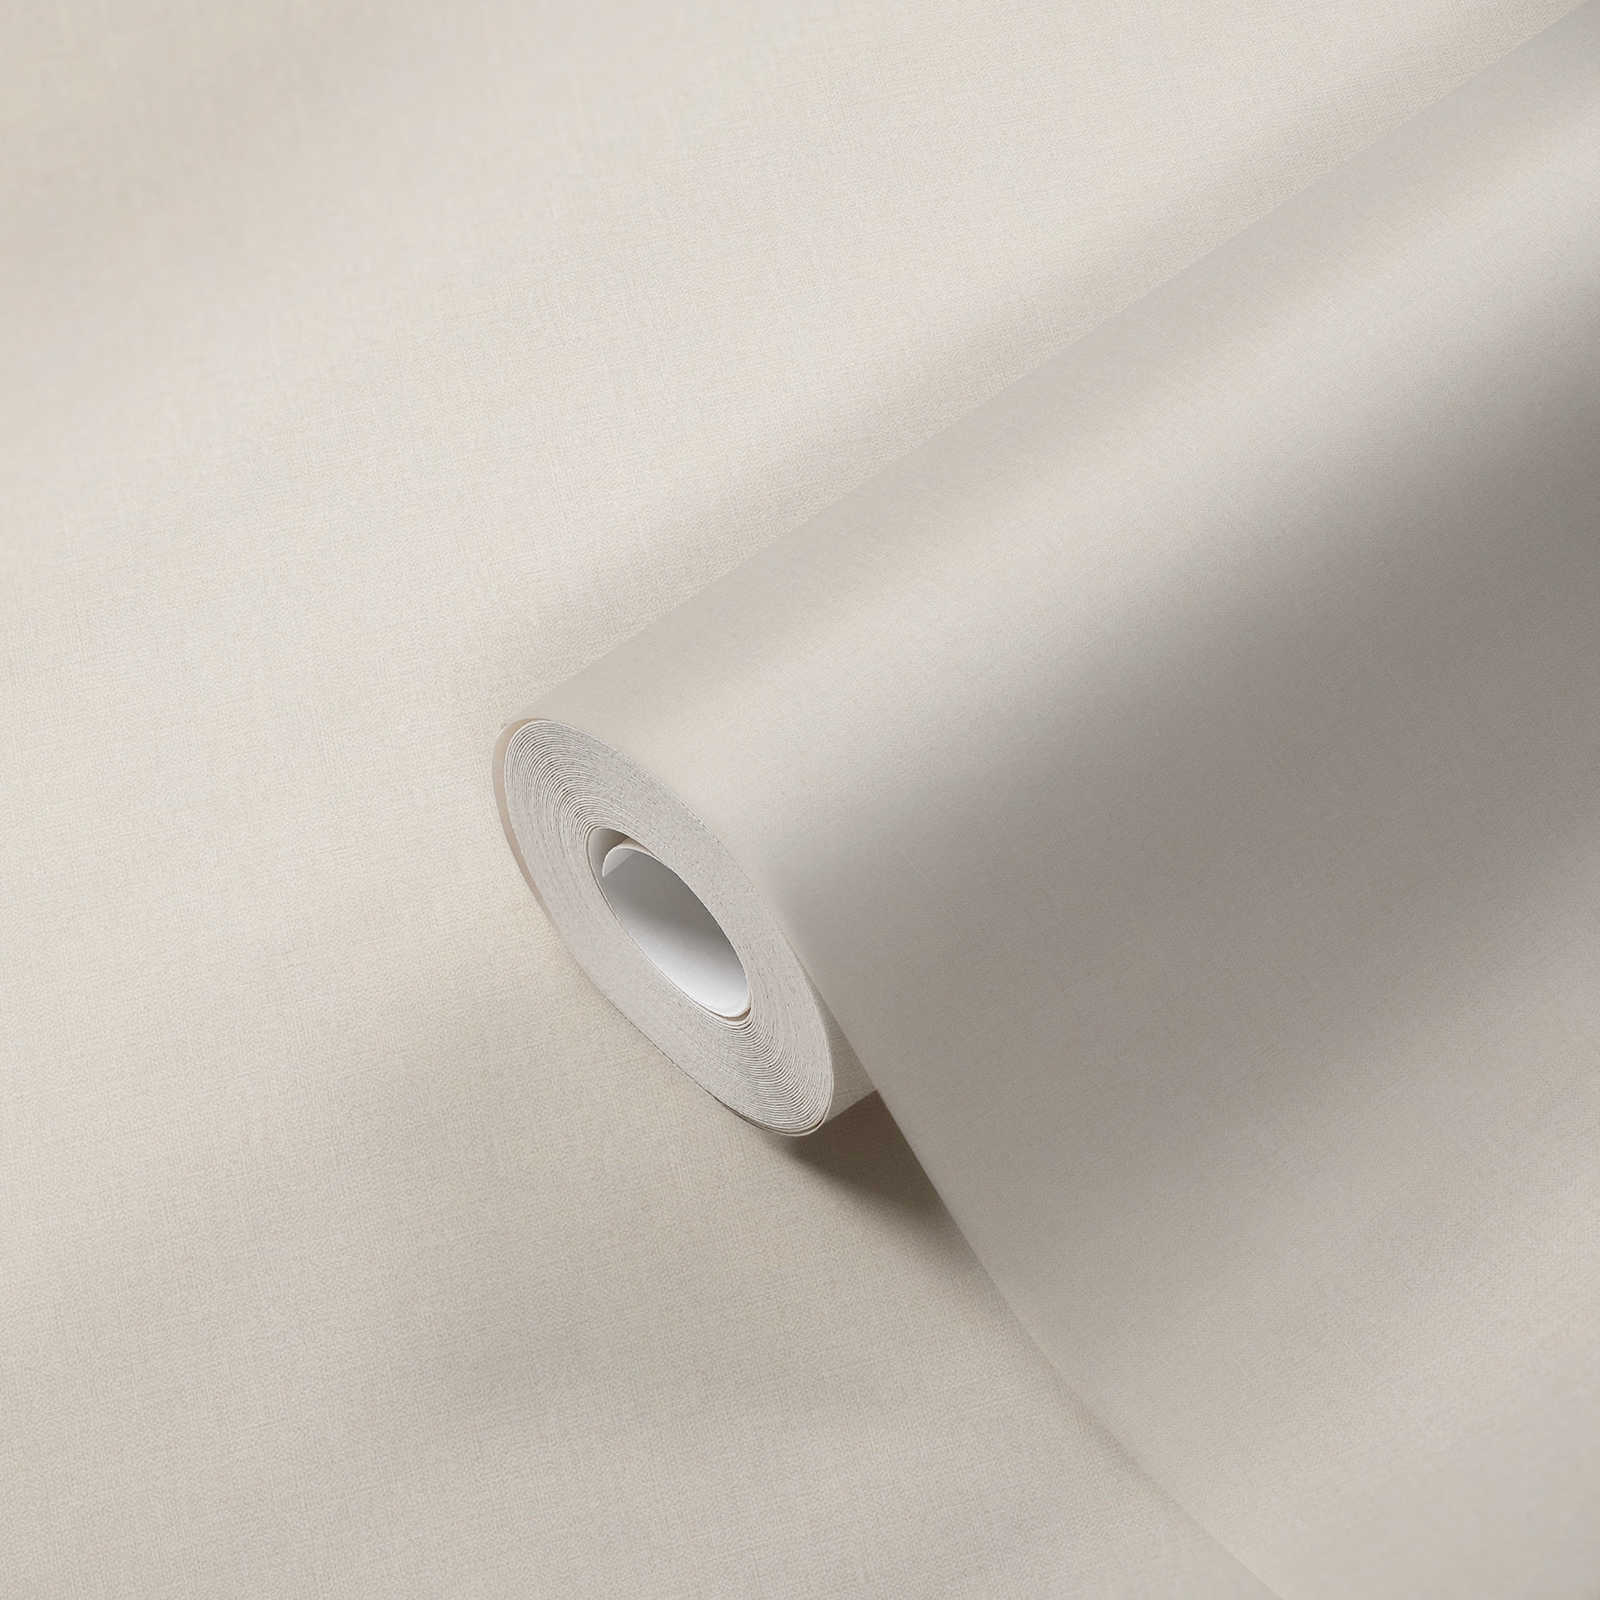             Carta da parati in tessuto non tessuto a tinta unita con lucentezza leggera - crema, grigio
        